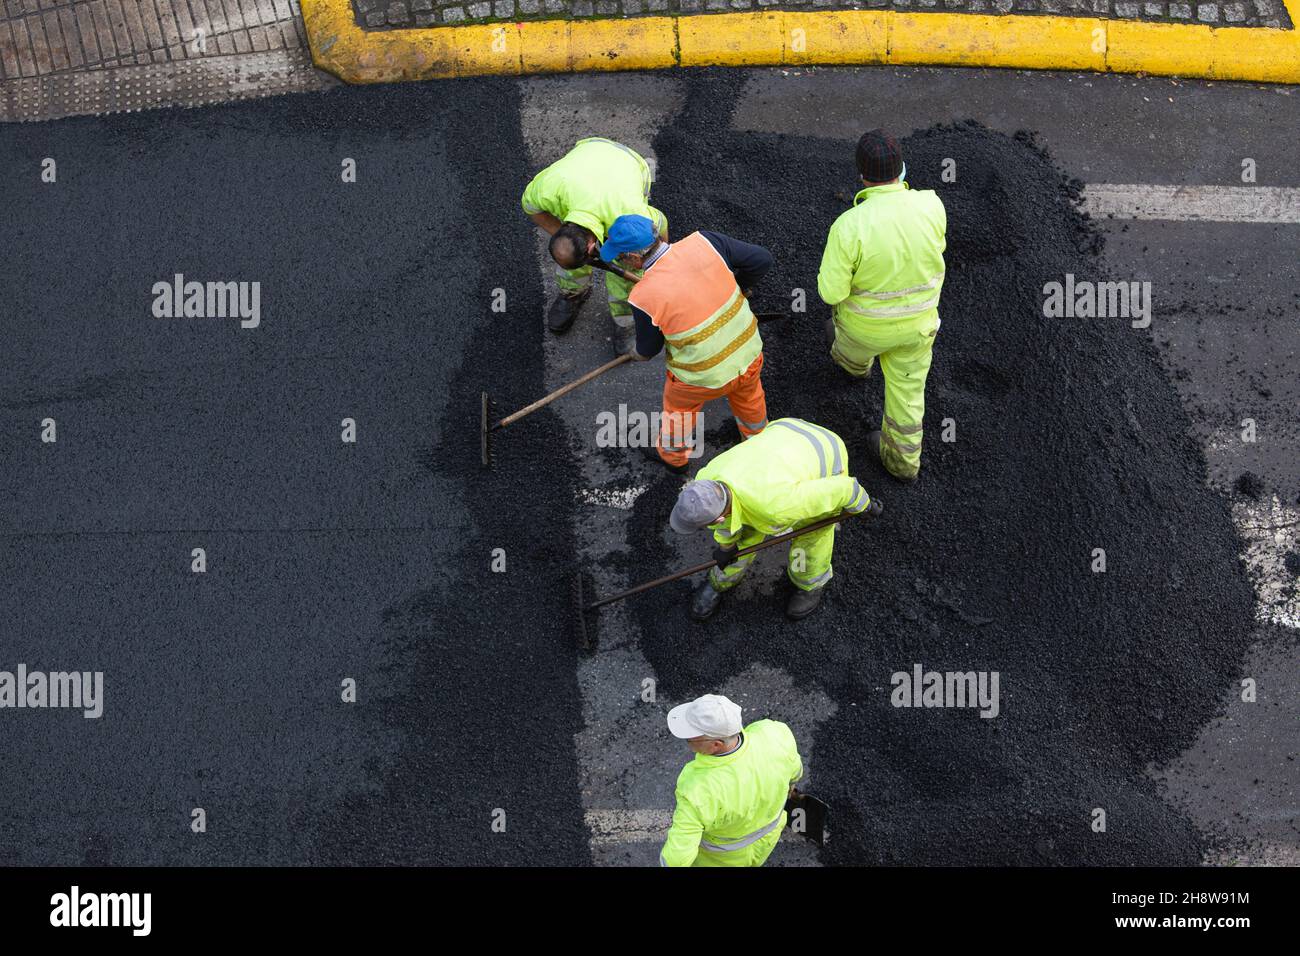 Santiago de Compostela, december 1, 2021: Workers during Asphalting Road Work on city street. Asphalt paving. High angle view Stock Photo